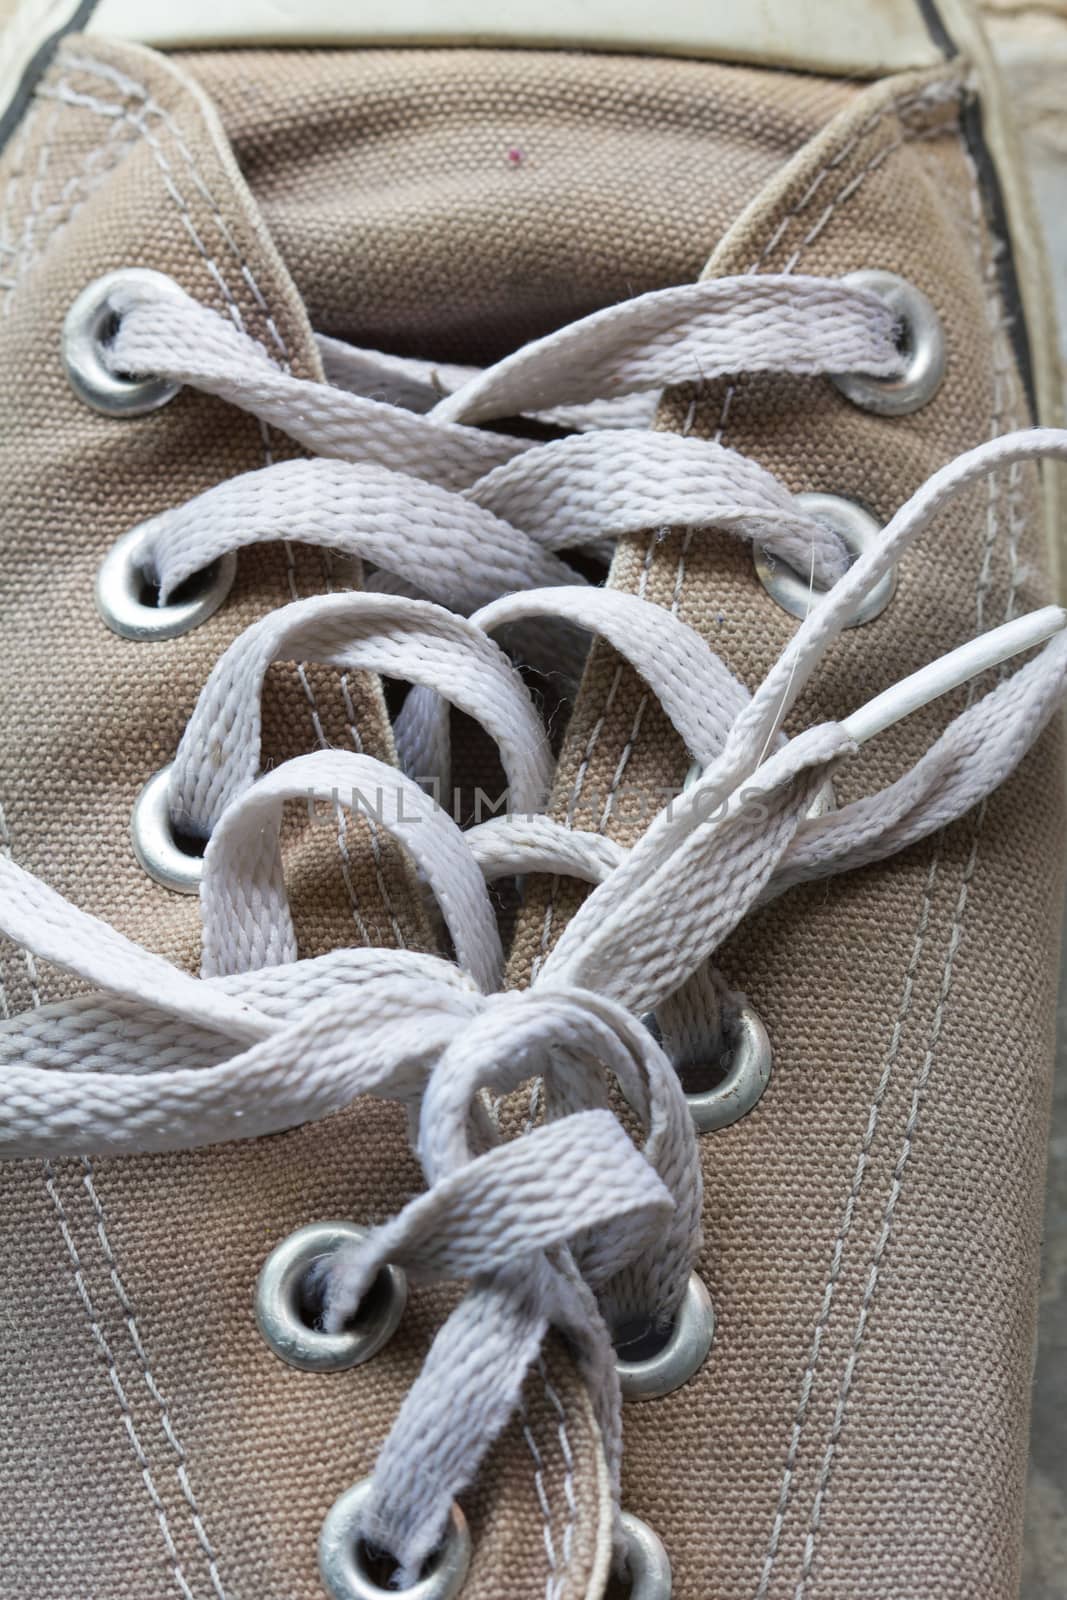 shoelace of canvas shoe